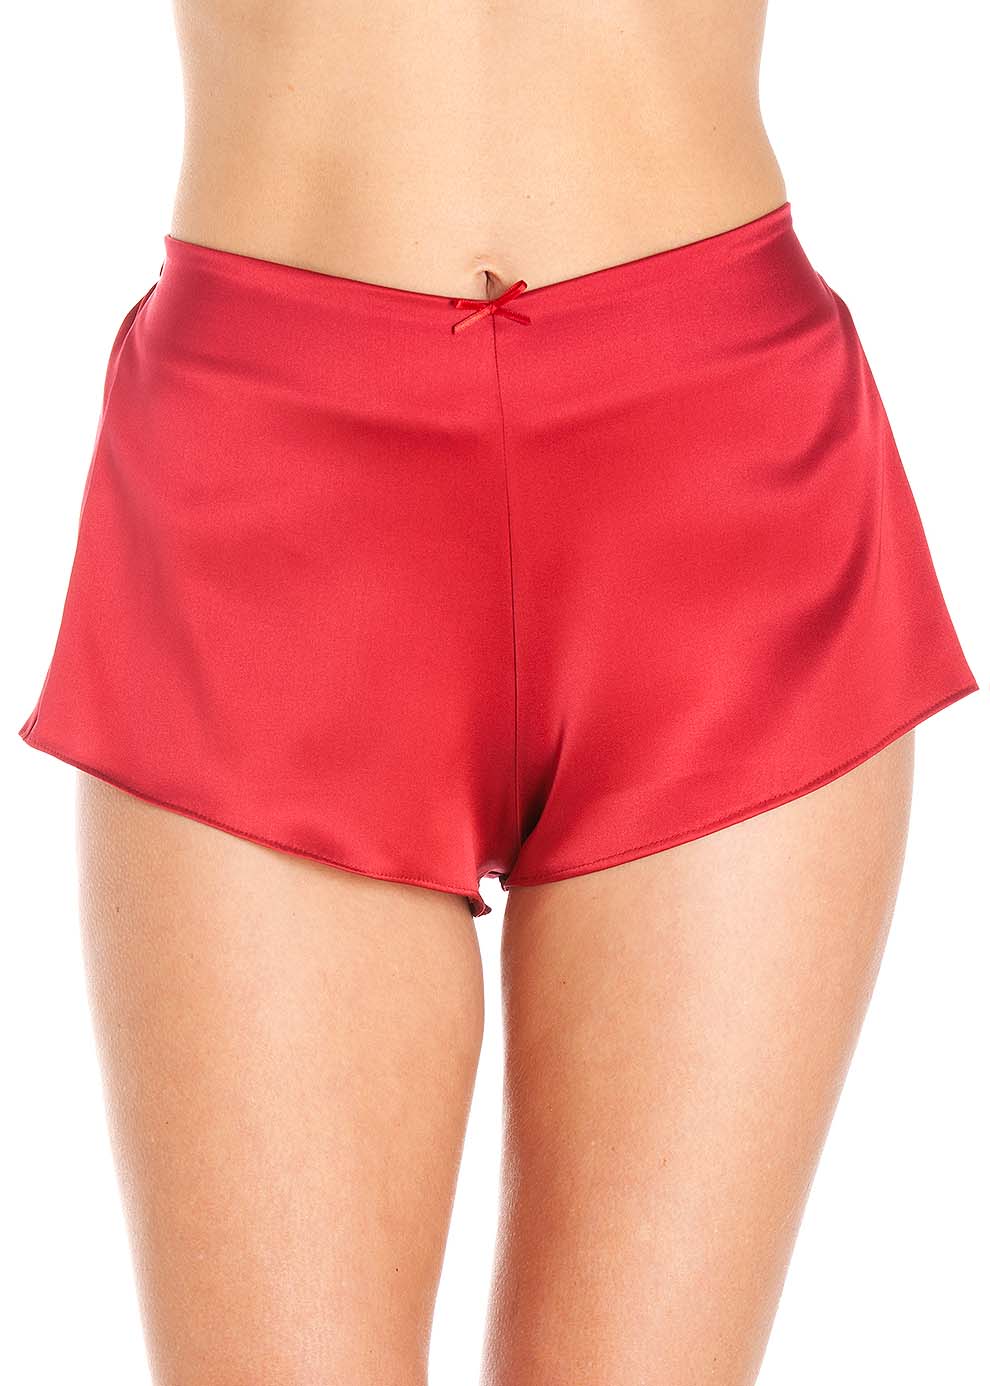 Cranberry silk shorts